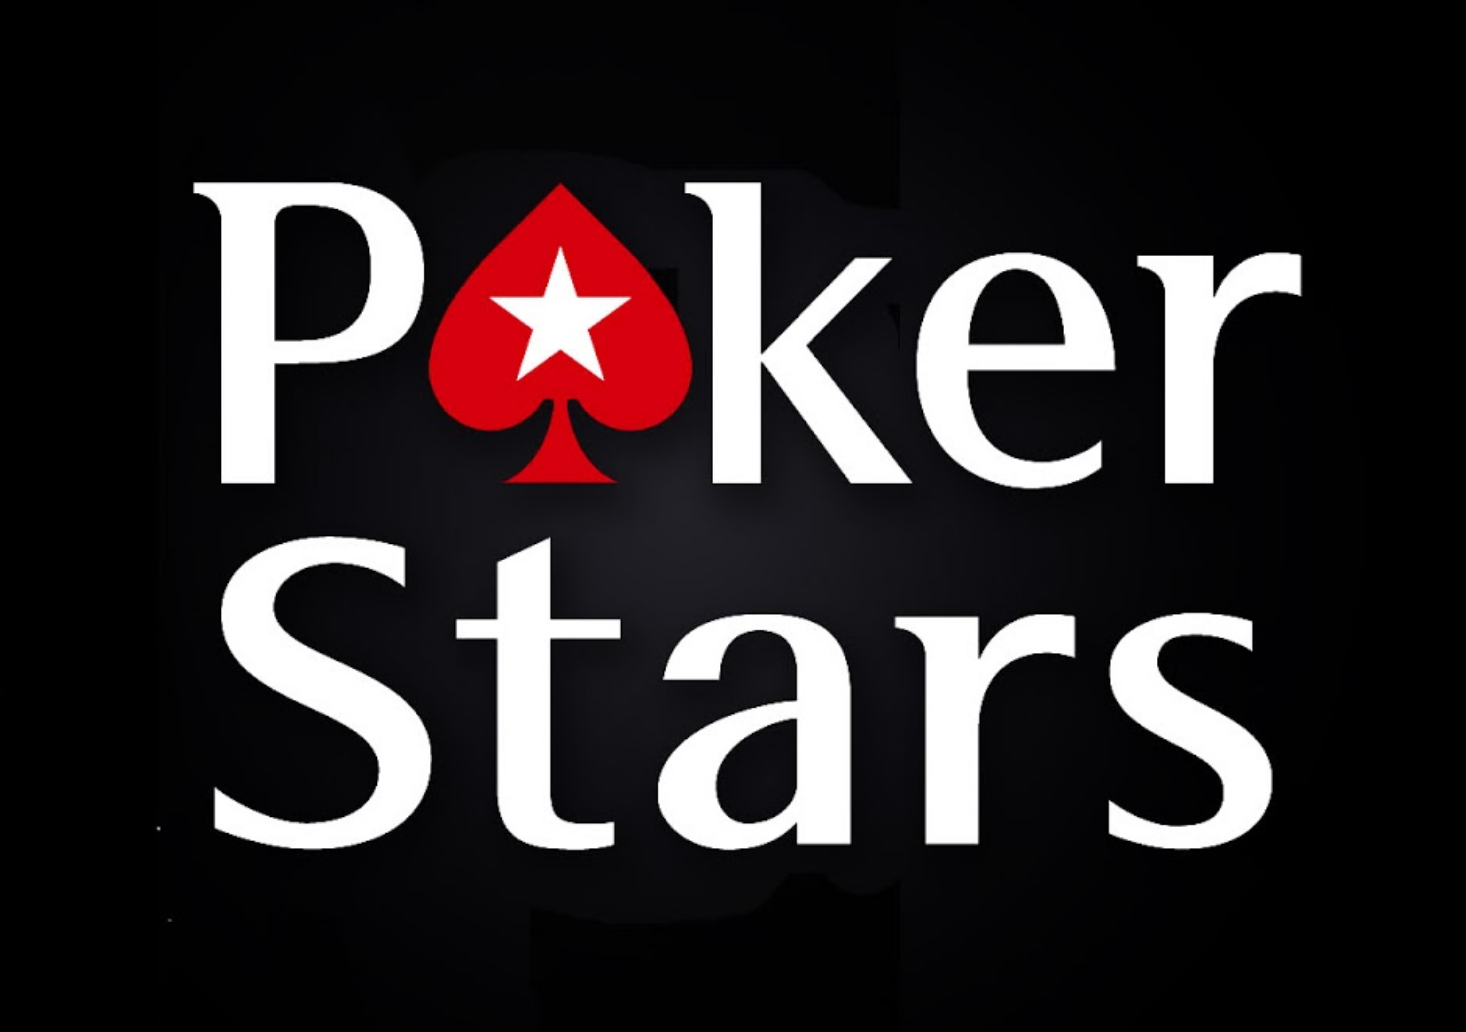 Poker stars com. Покерстарс. Эмблема покерстарс. Покер Стар. Покер старс картинки.